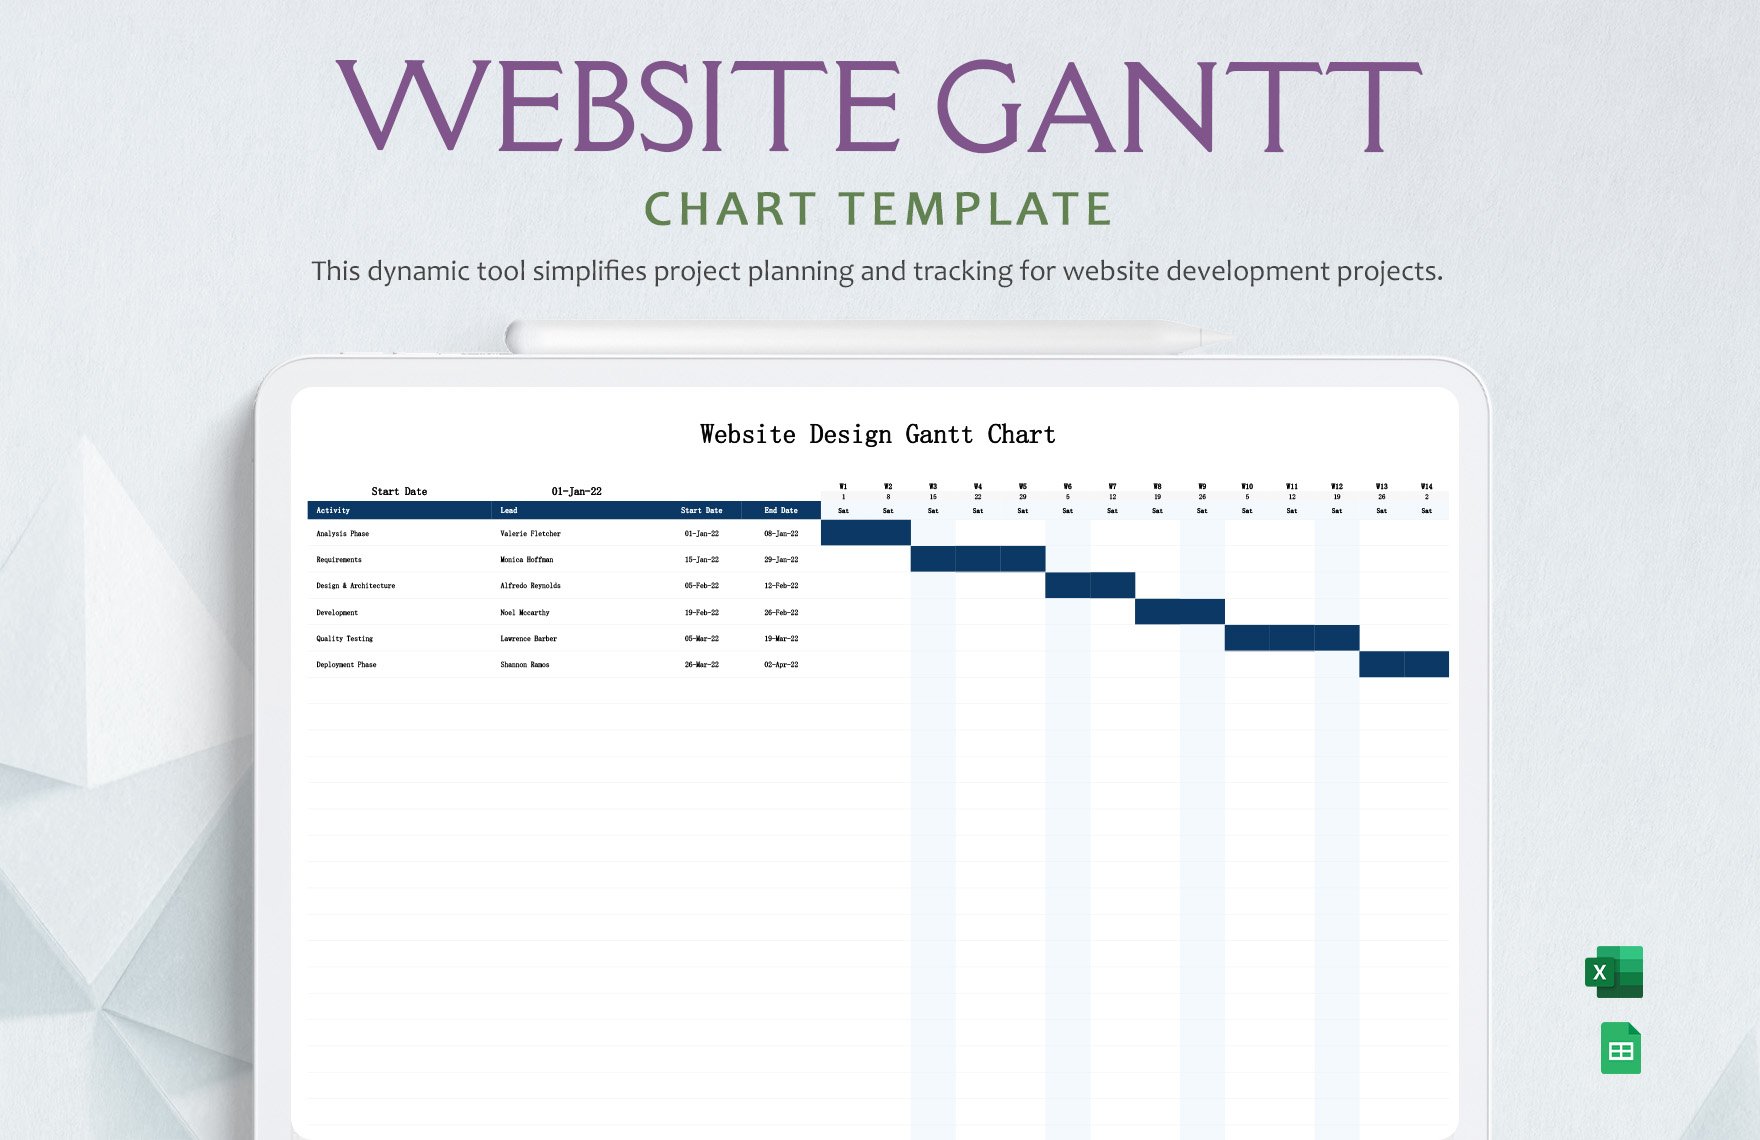 Website Design Gantt Chart Template in Excel